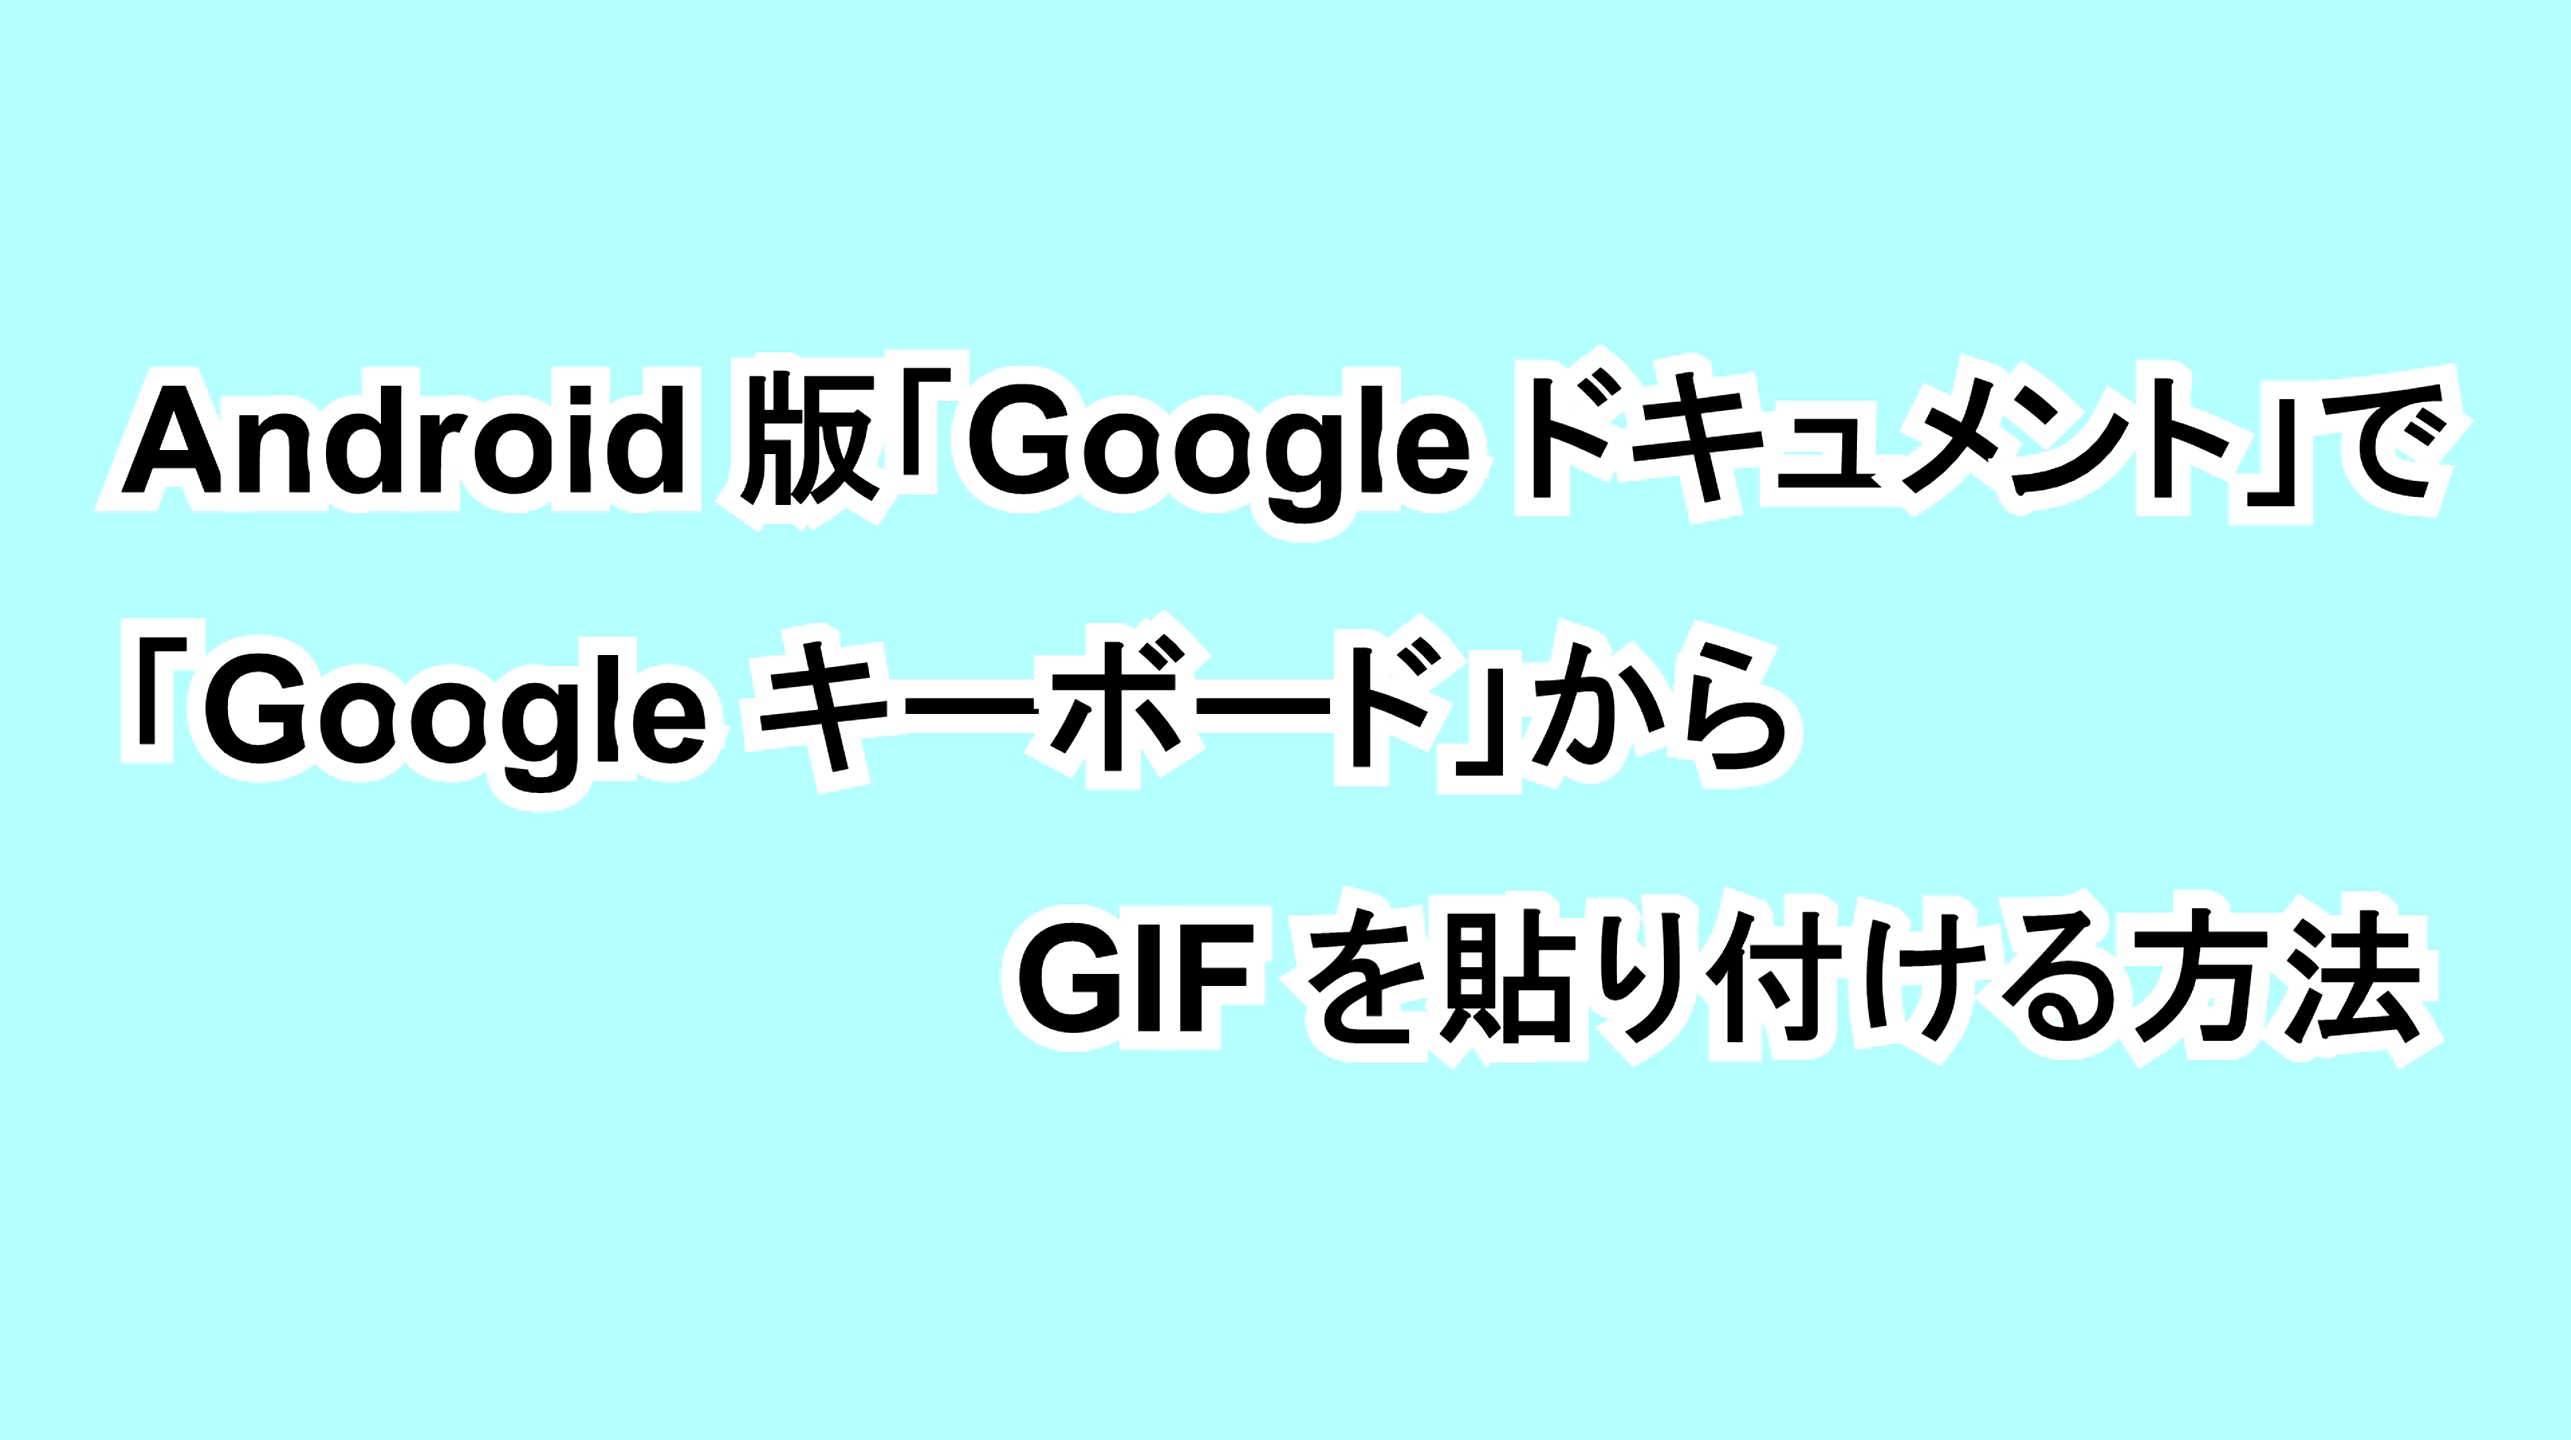 Android版 Google ドキュメント で Google キーボード からgifを貼り付ける方法 Google Help Heroes By Jetstream